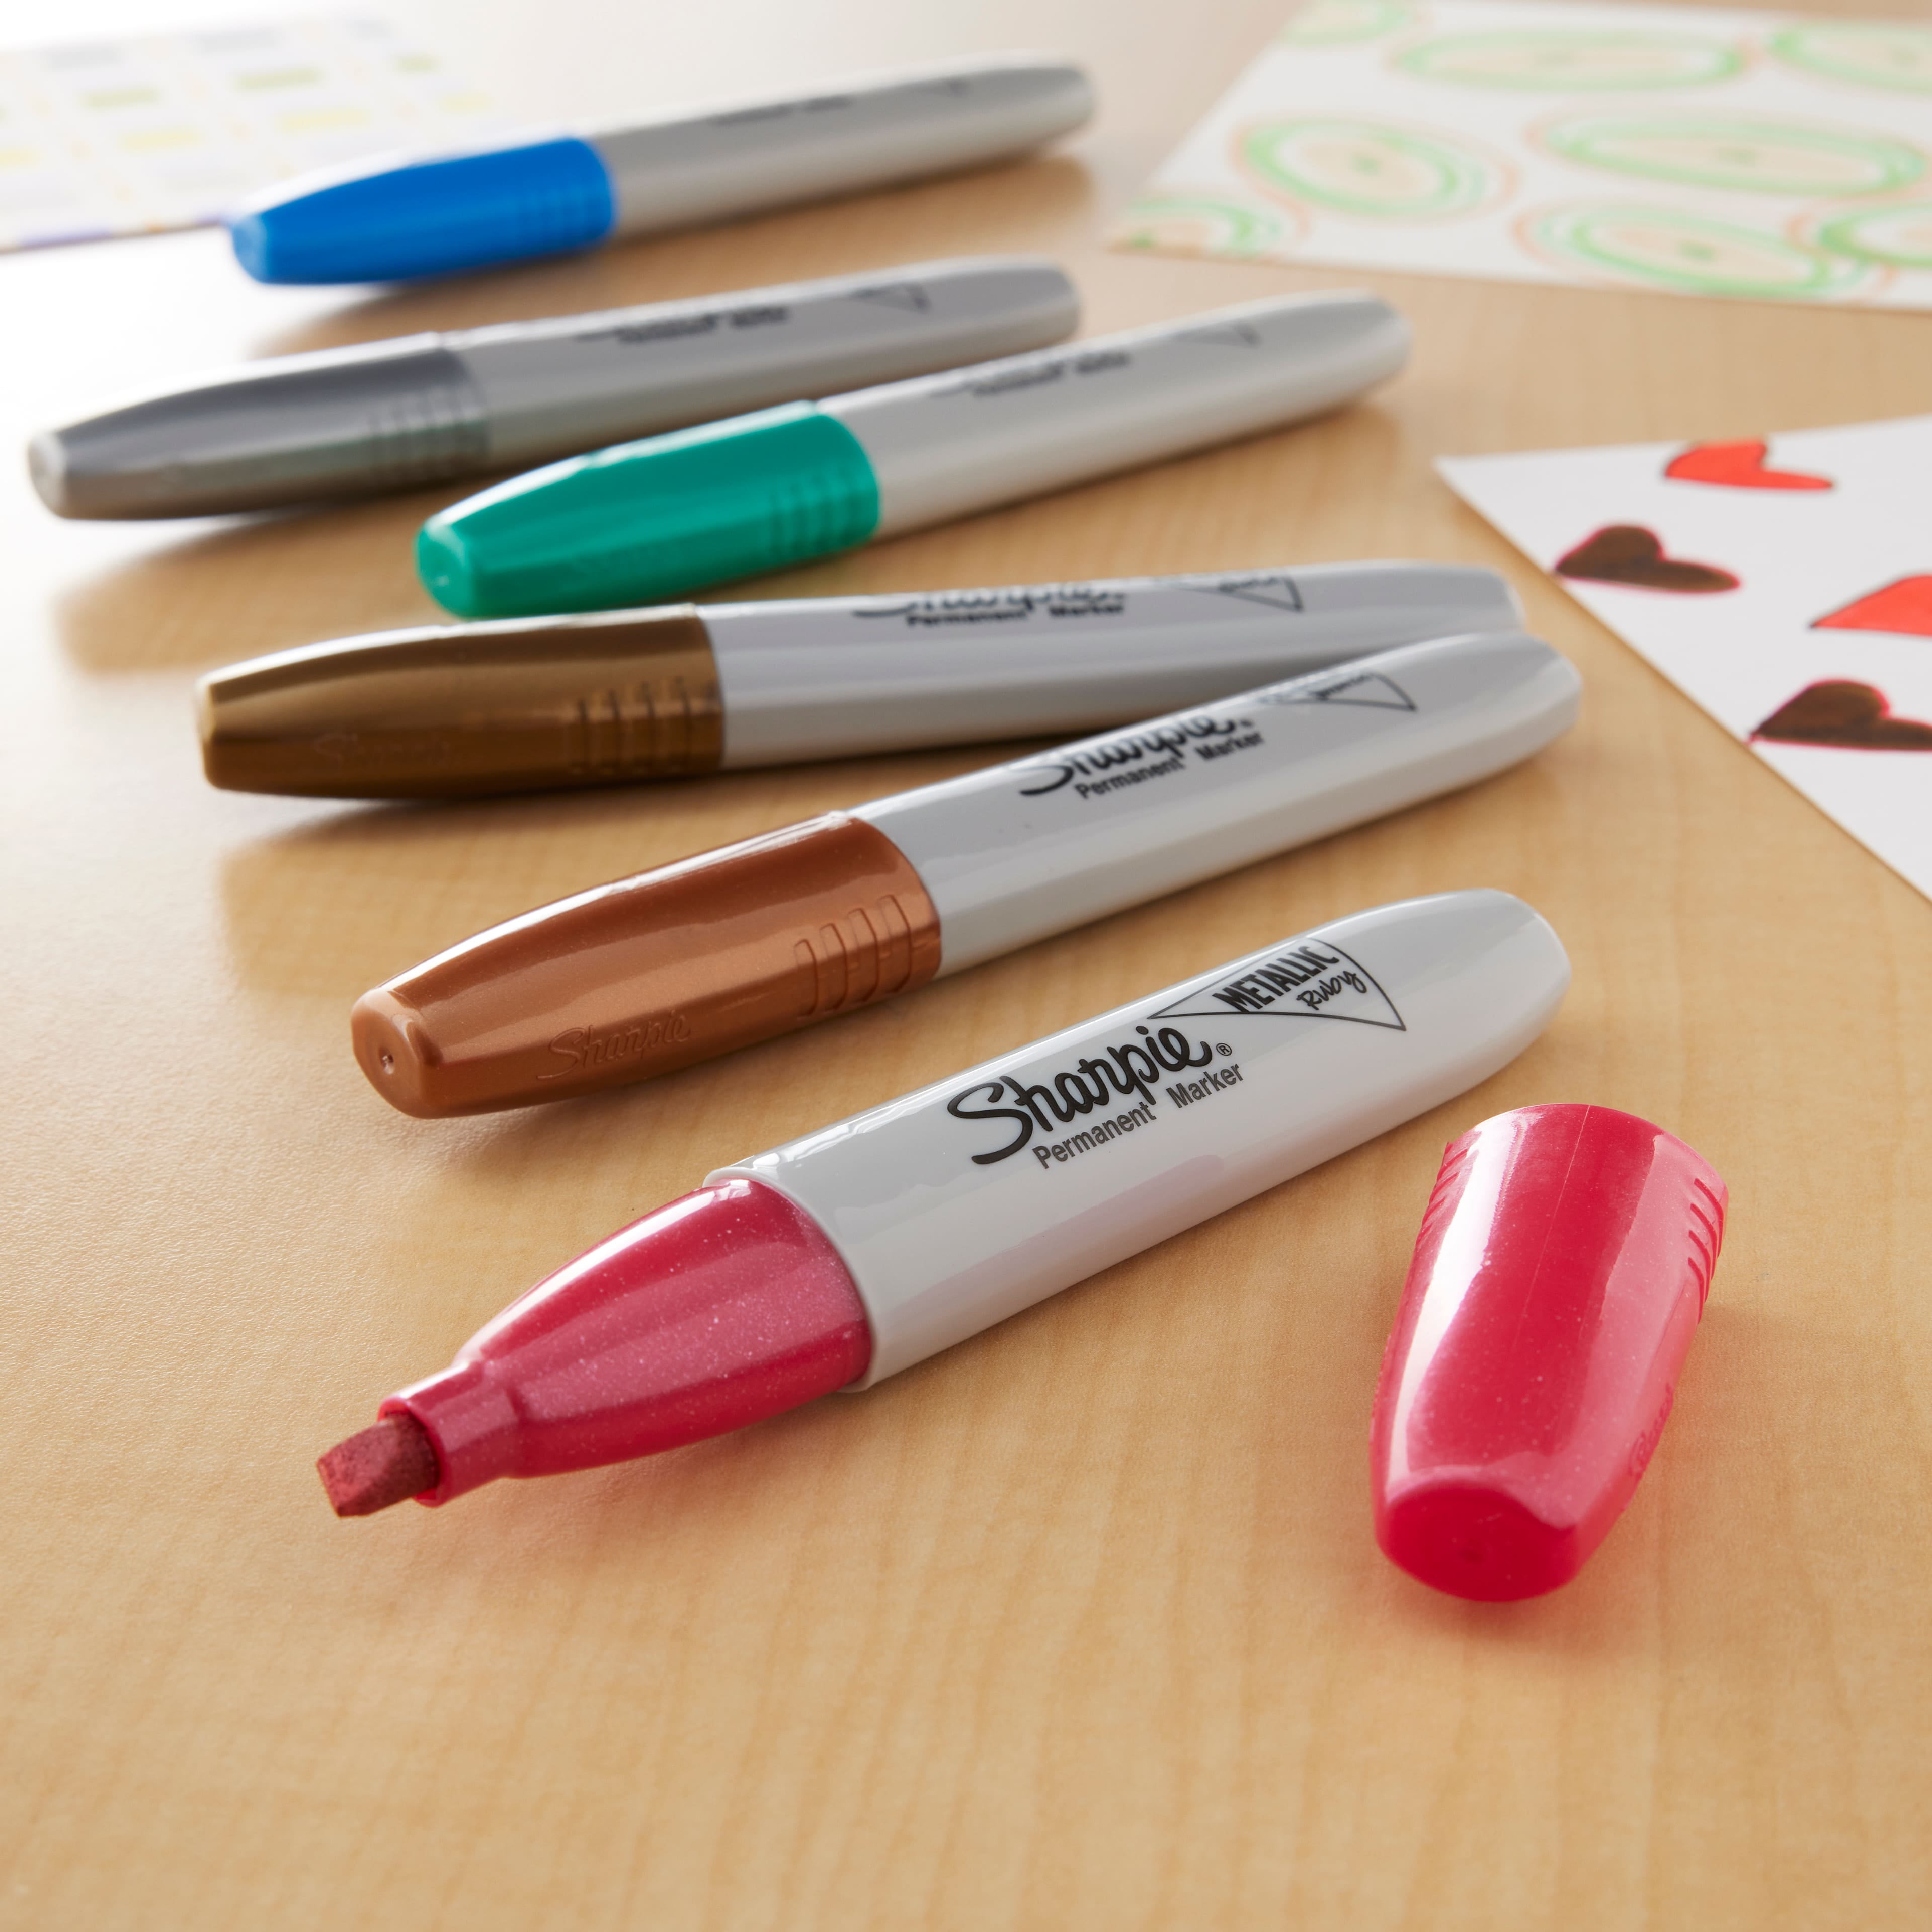 sharpie, sharpie markers, felt tipped pens, paint markers, sharpies,  colored pens, colorizing brass, adding color to pewter, color pens,  coloring